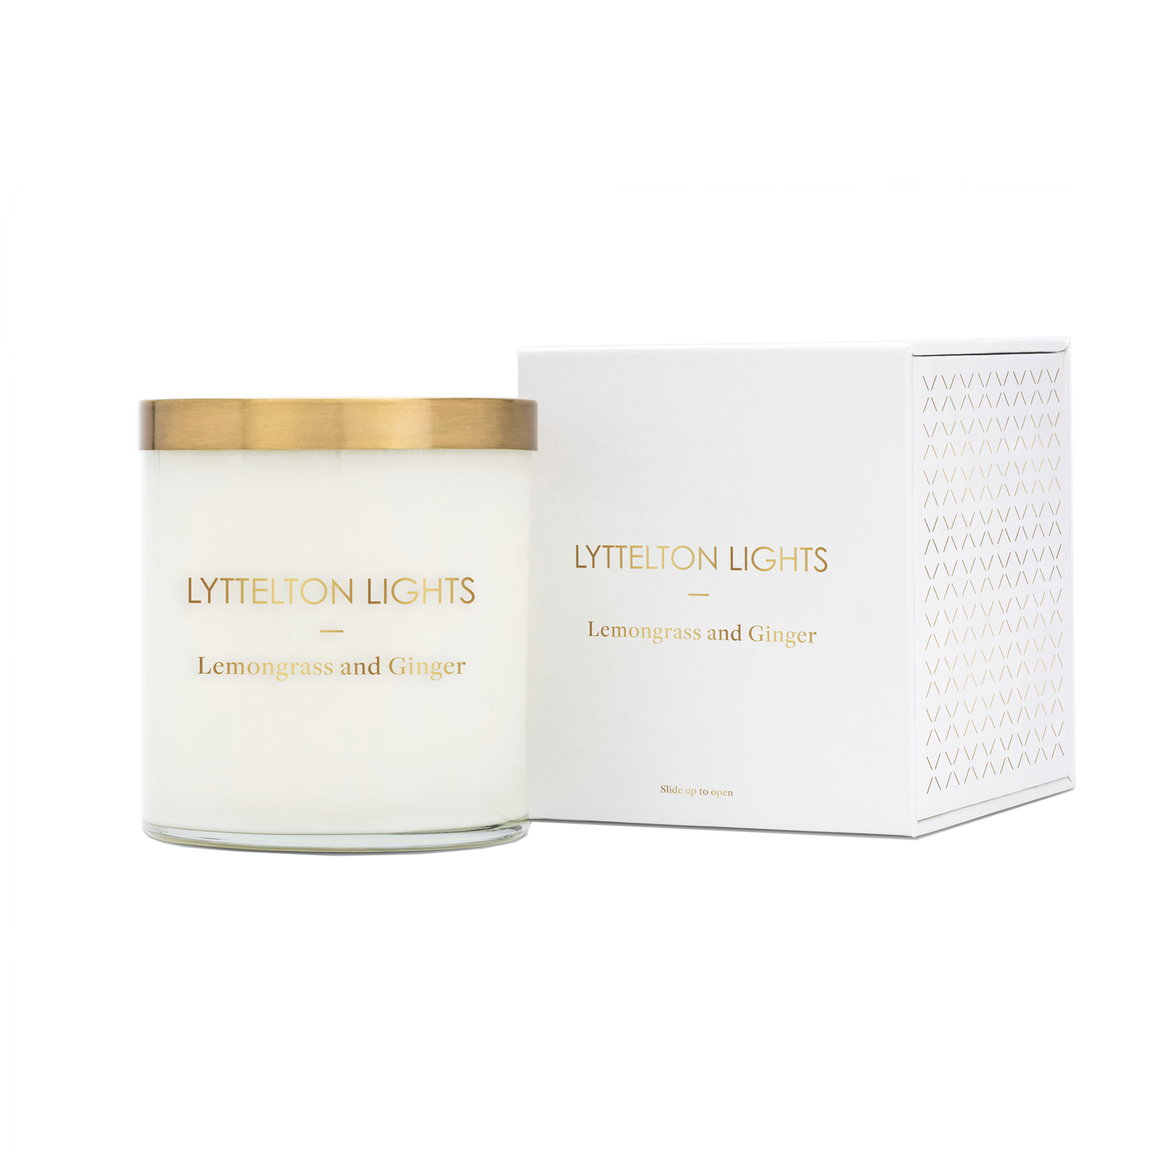 LYTTLETON LIGHTS LEMONGRASS & GINGER CANDLE -  LARGE